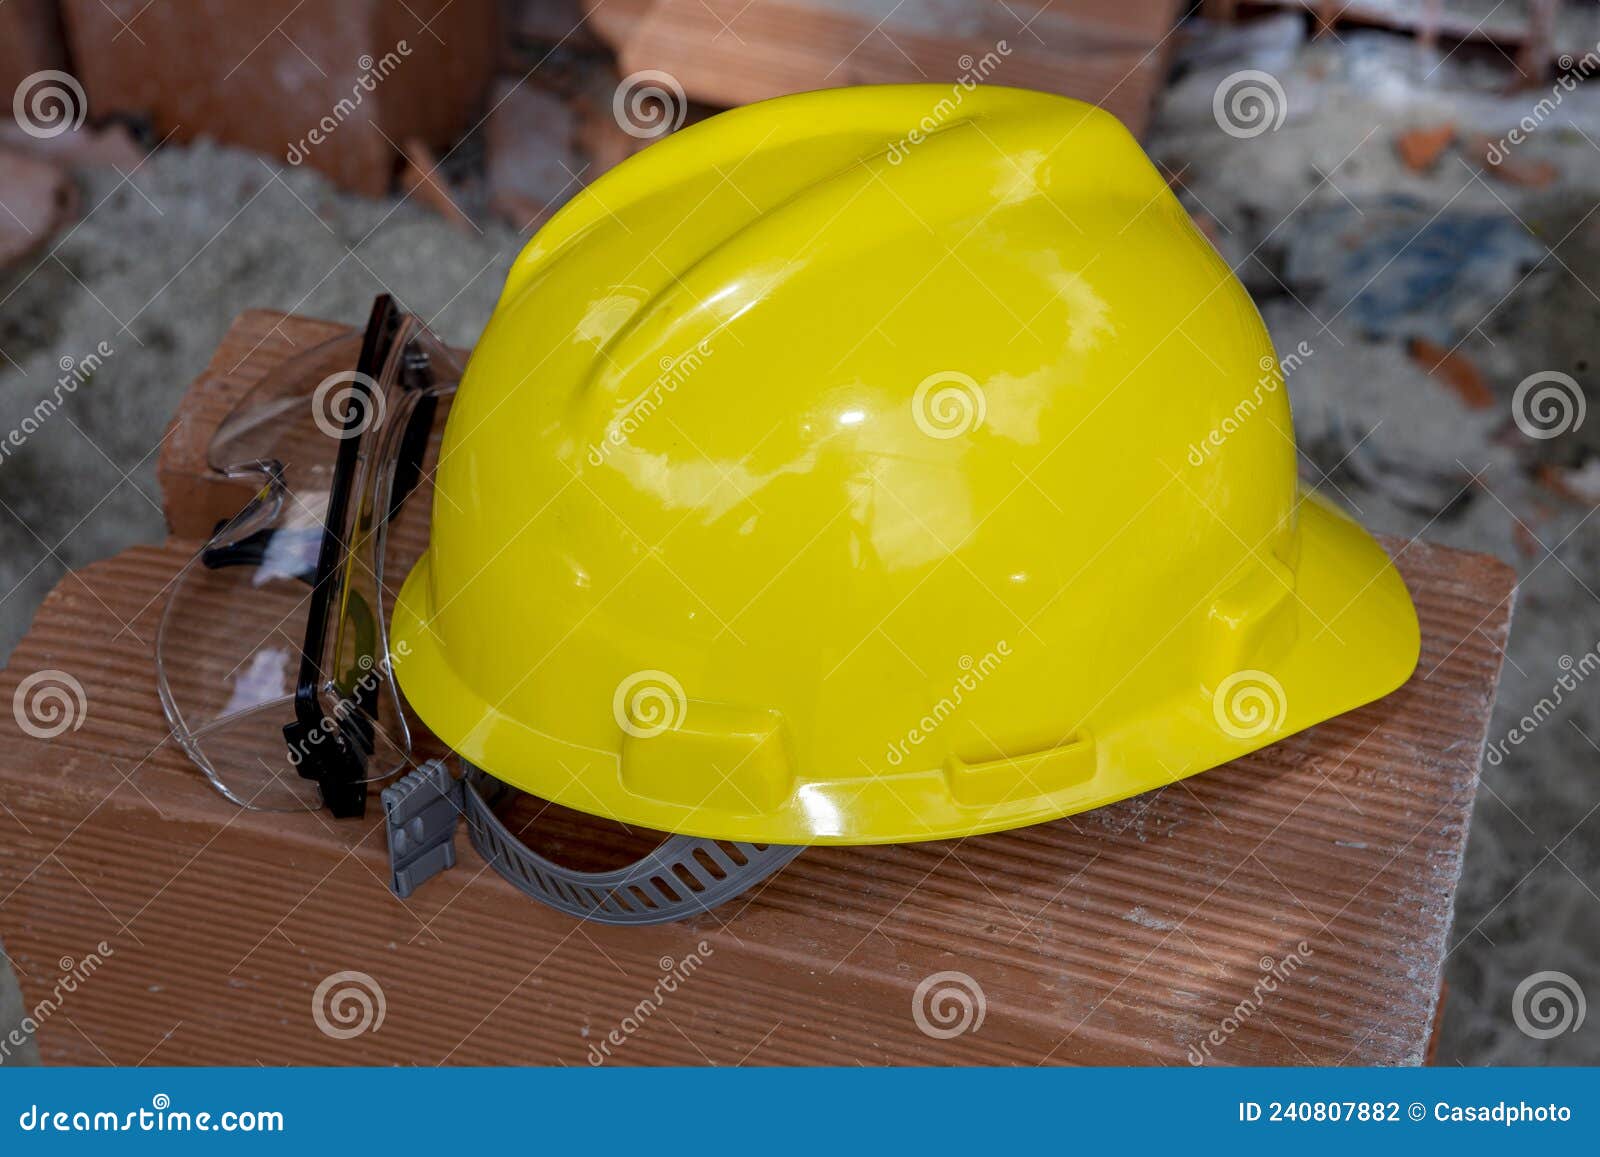 yellow protective helmet on pile of red bricks